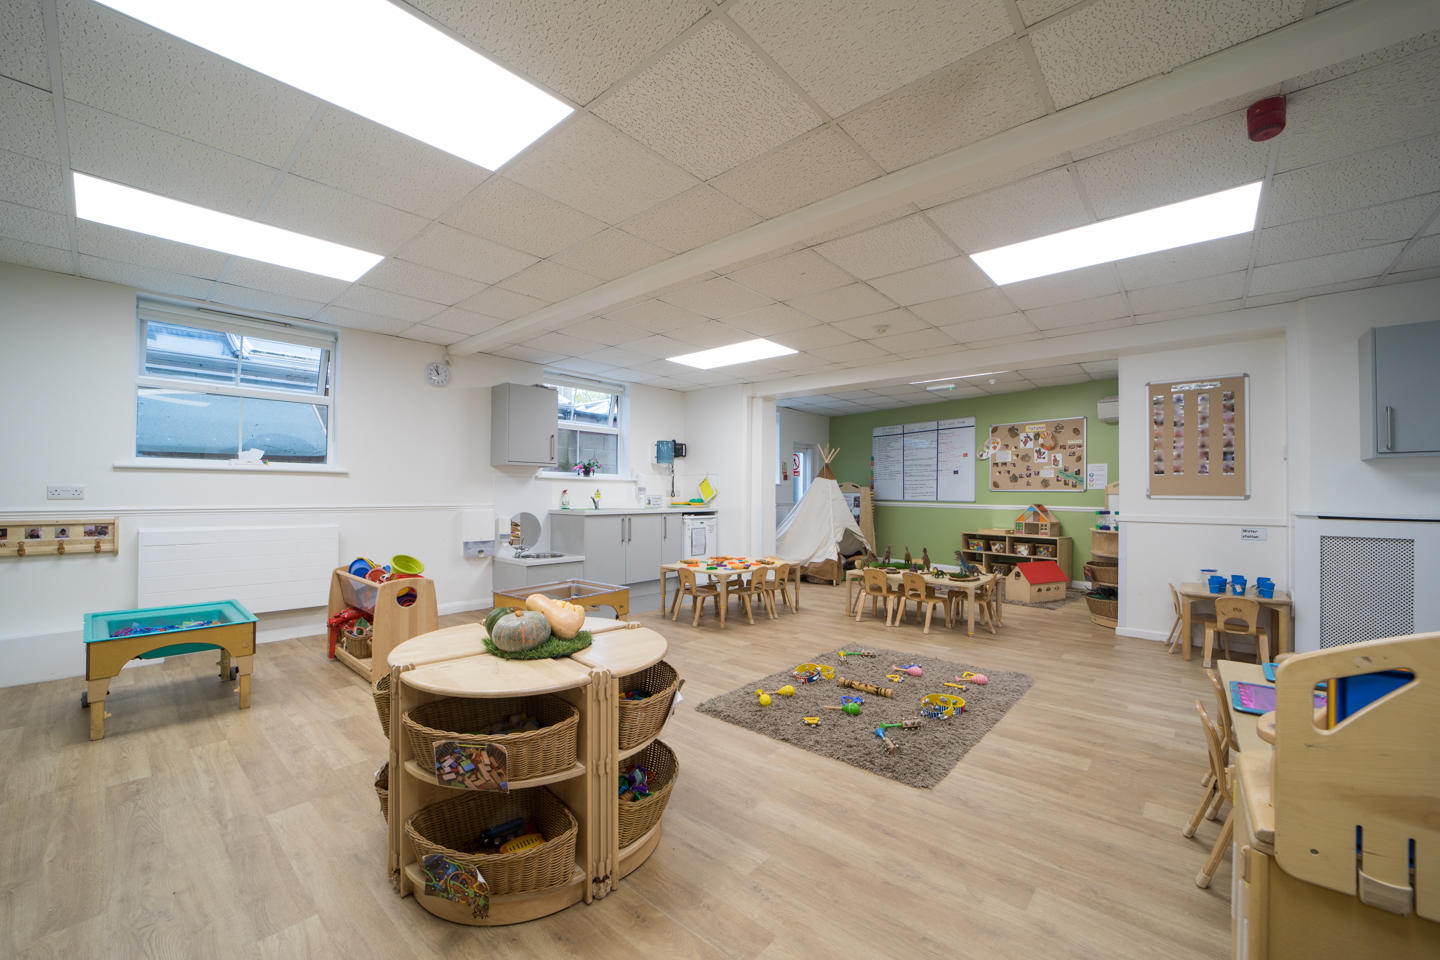 Bright Horizons Putney Day Nursery and Preschool Putney 03702 188170